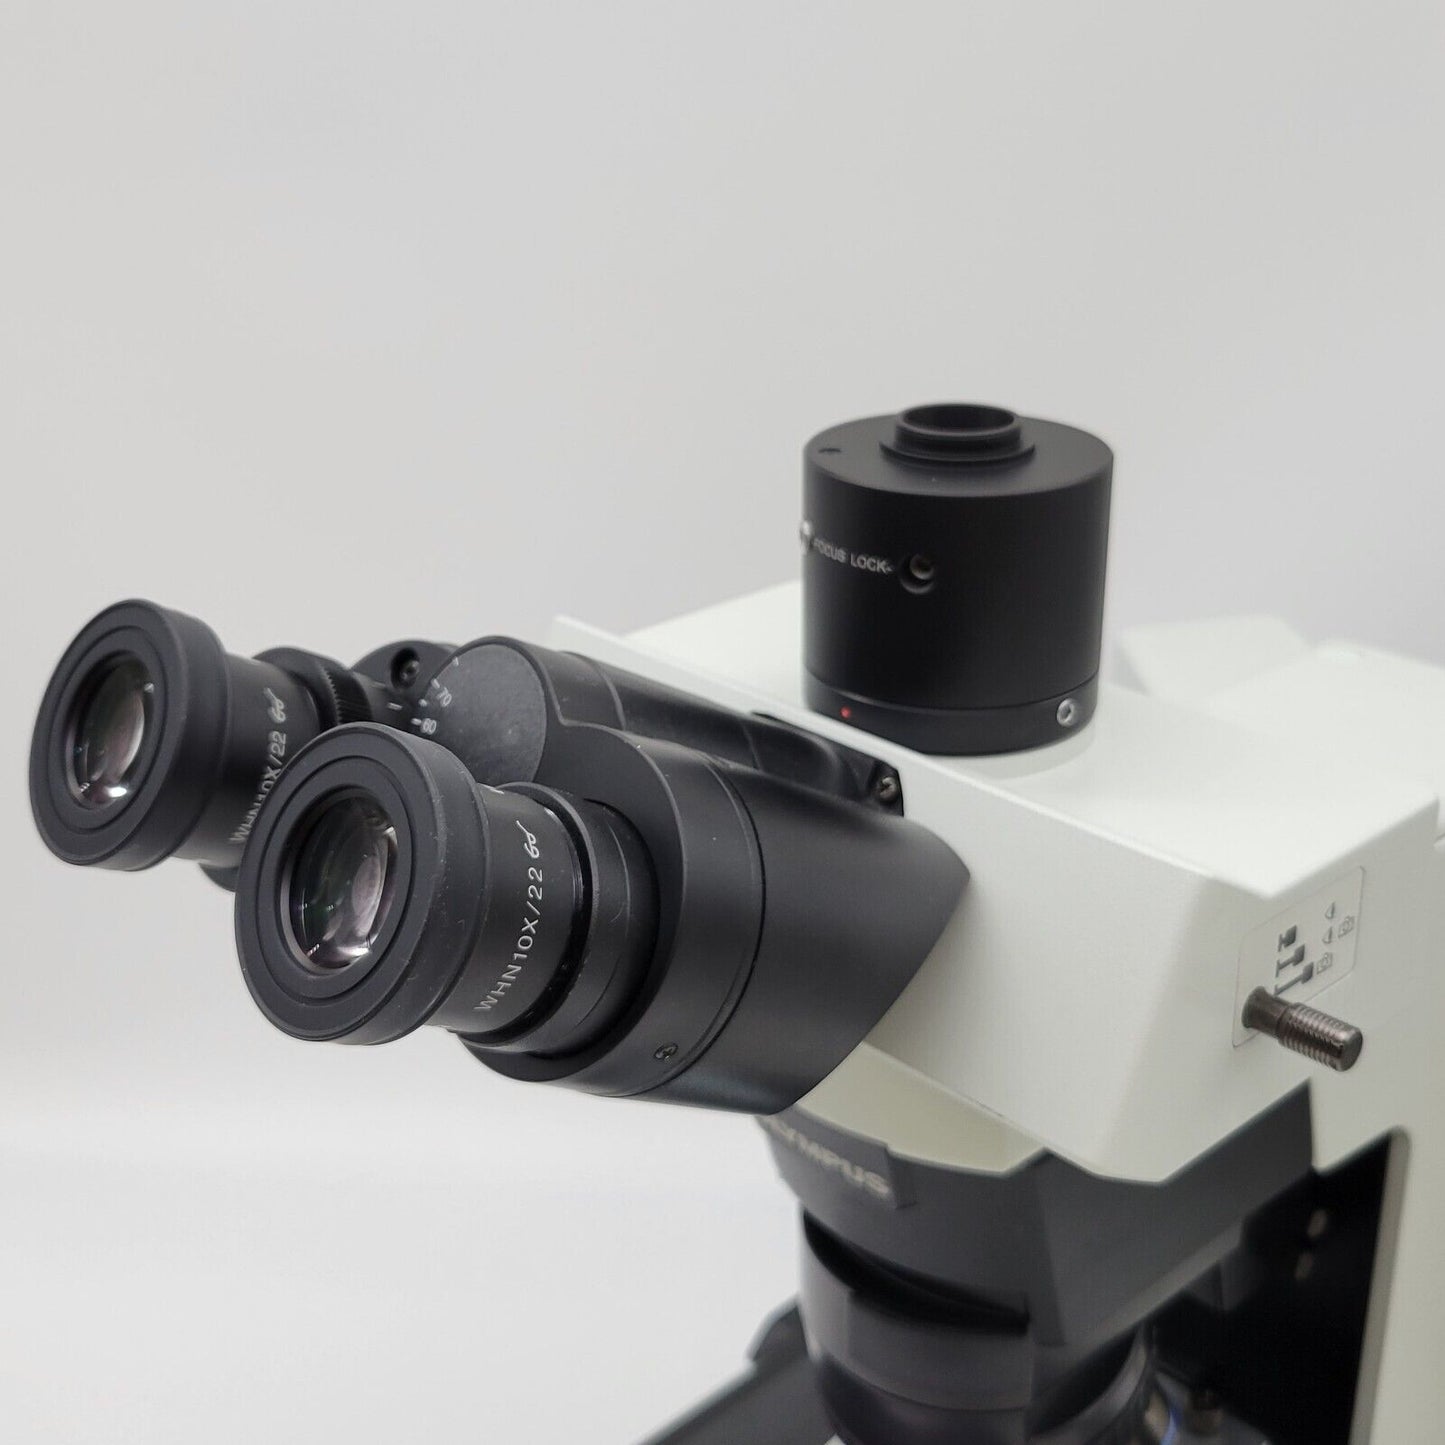 Olympus Microscope BX45 Pathology / Mohs with Fluorites and Trinocular Head - microscopemarketplace